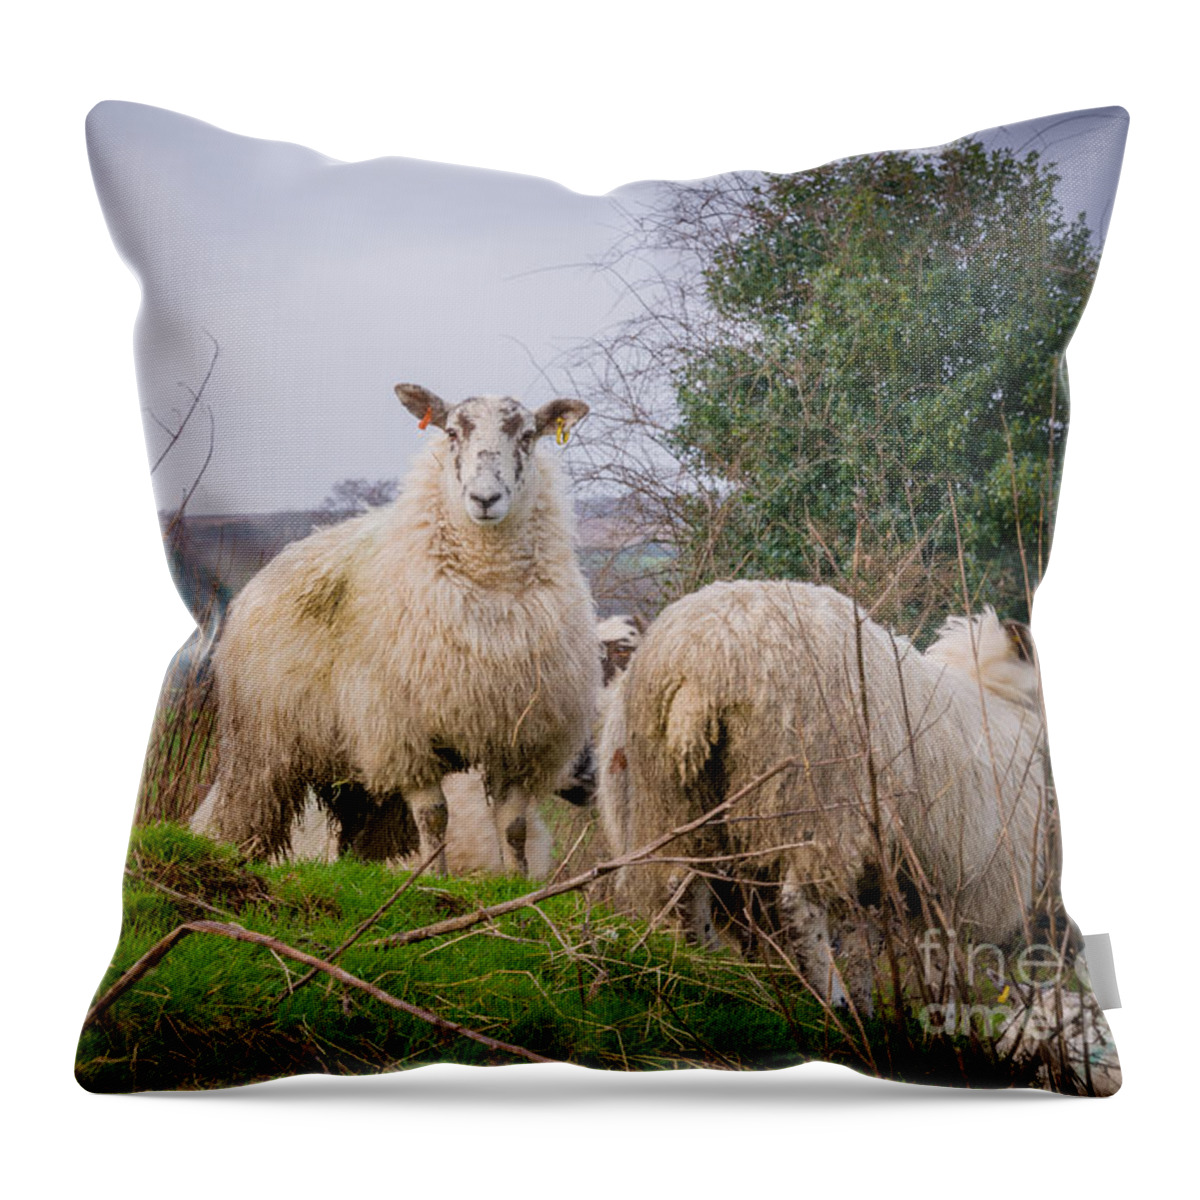 Blubberhouses Throw Pillow featuring the photograph Sheep #4 by Mariusz Talarek